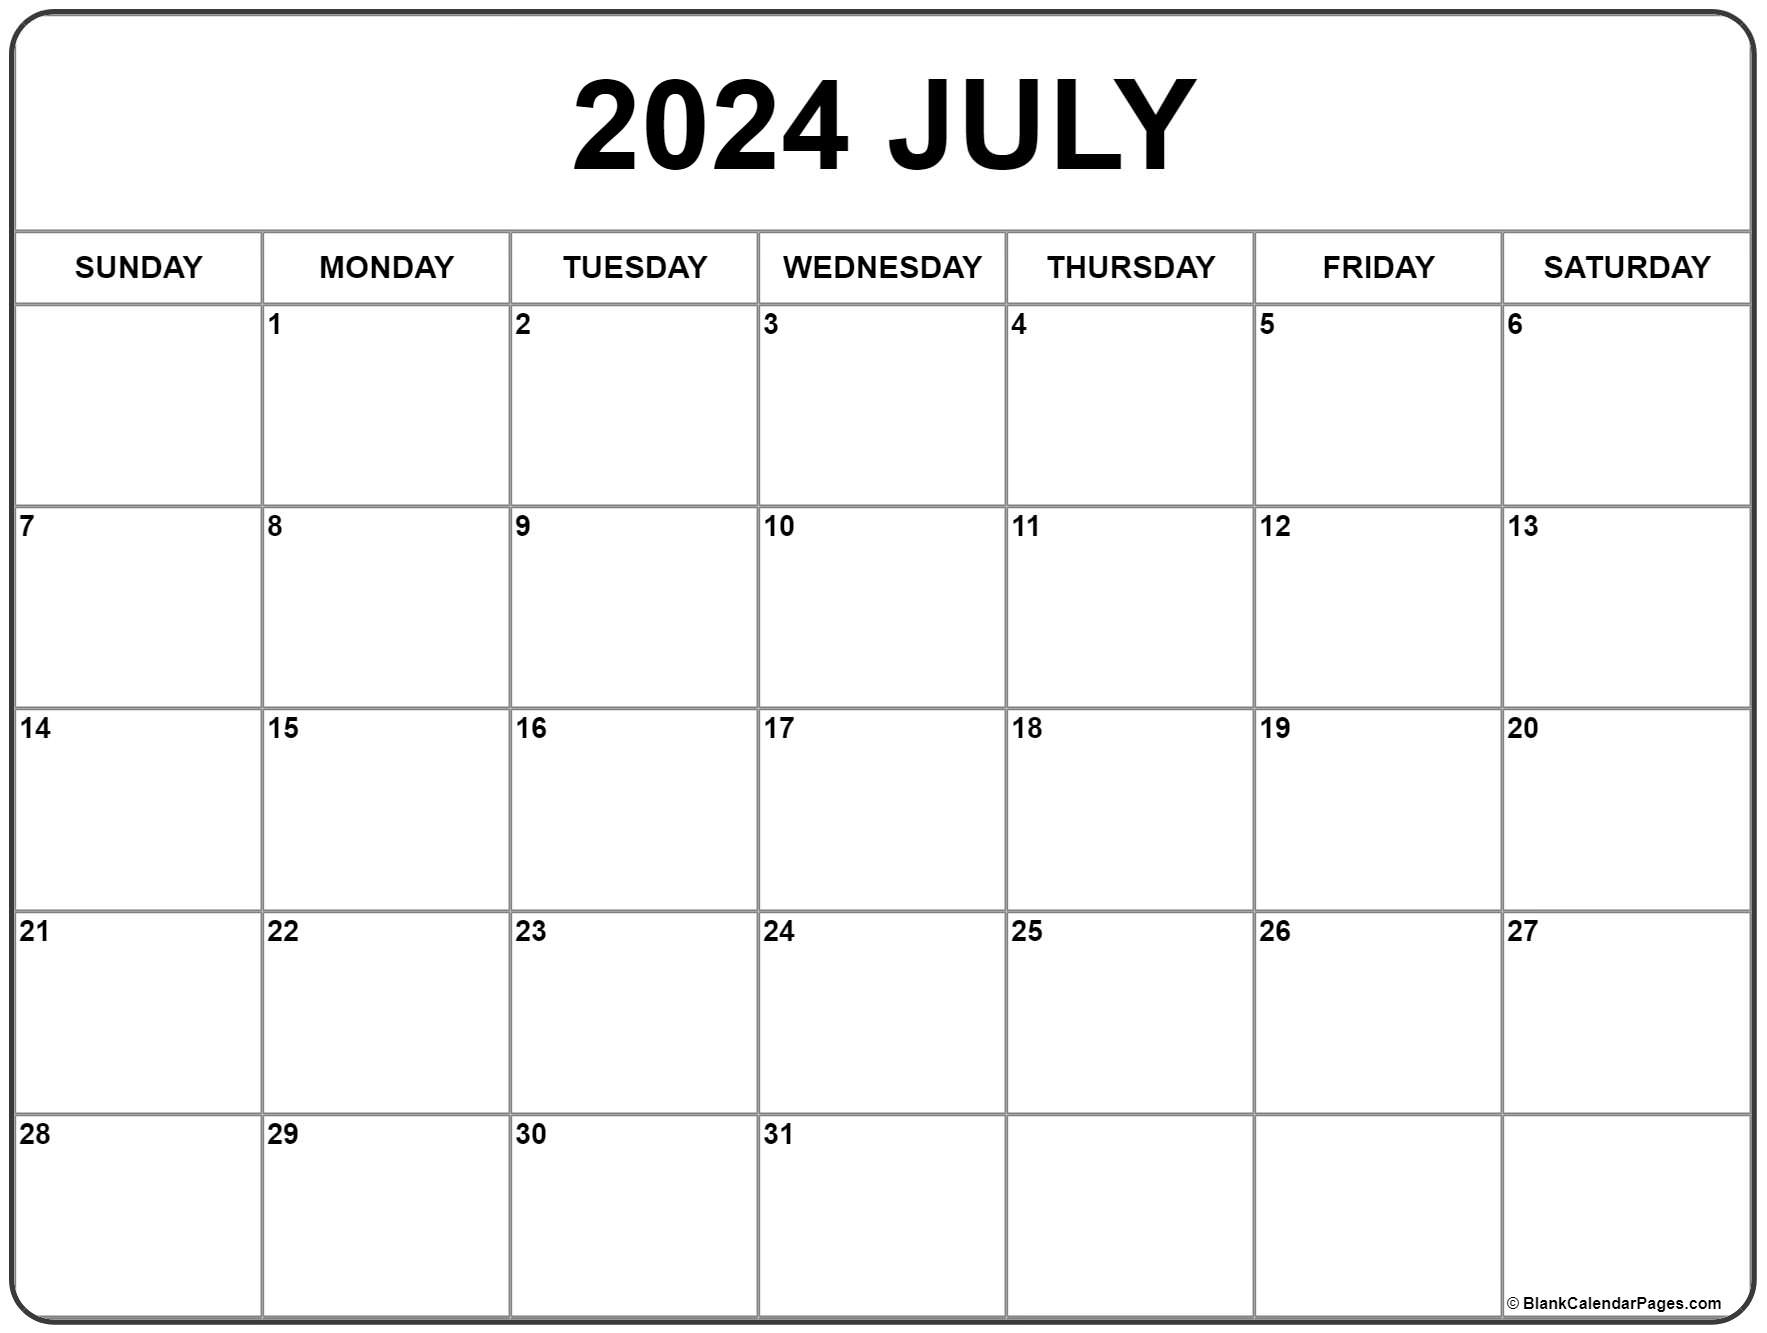 July 2024 Calendar | Free Printable Calendar intended for 24 July 2024 Calendar Printable